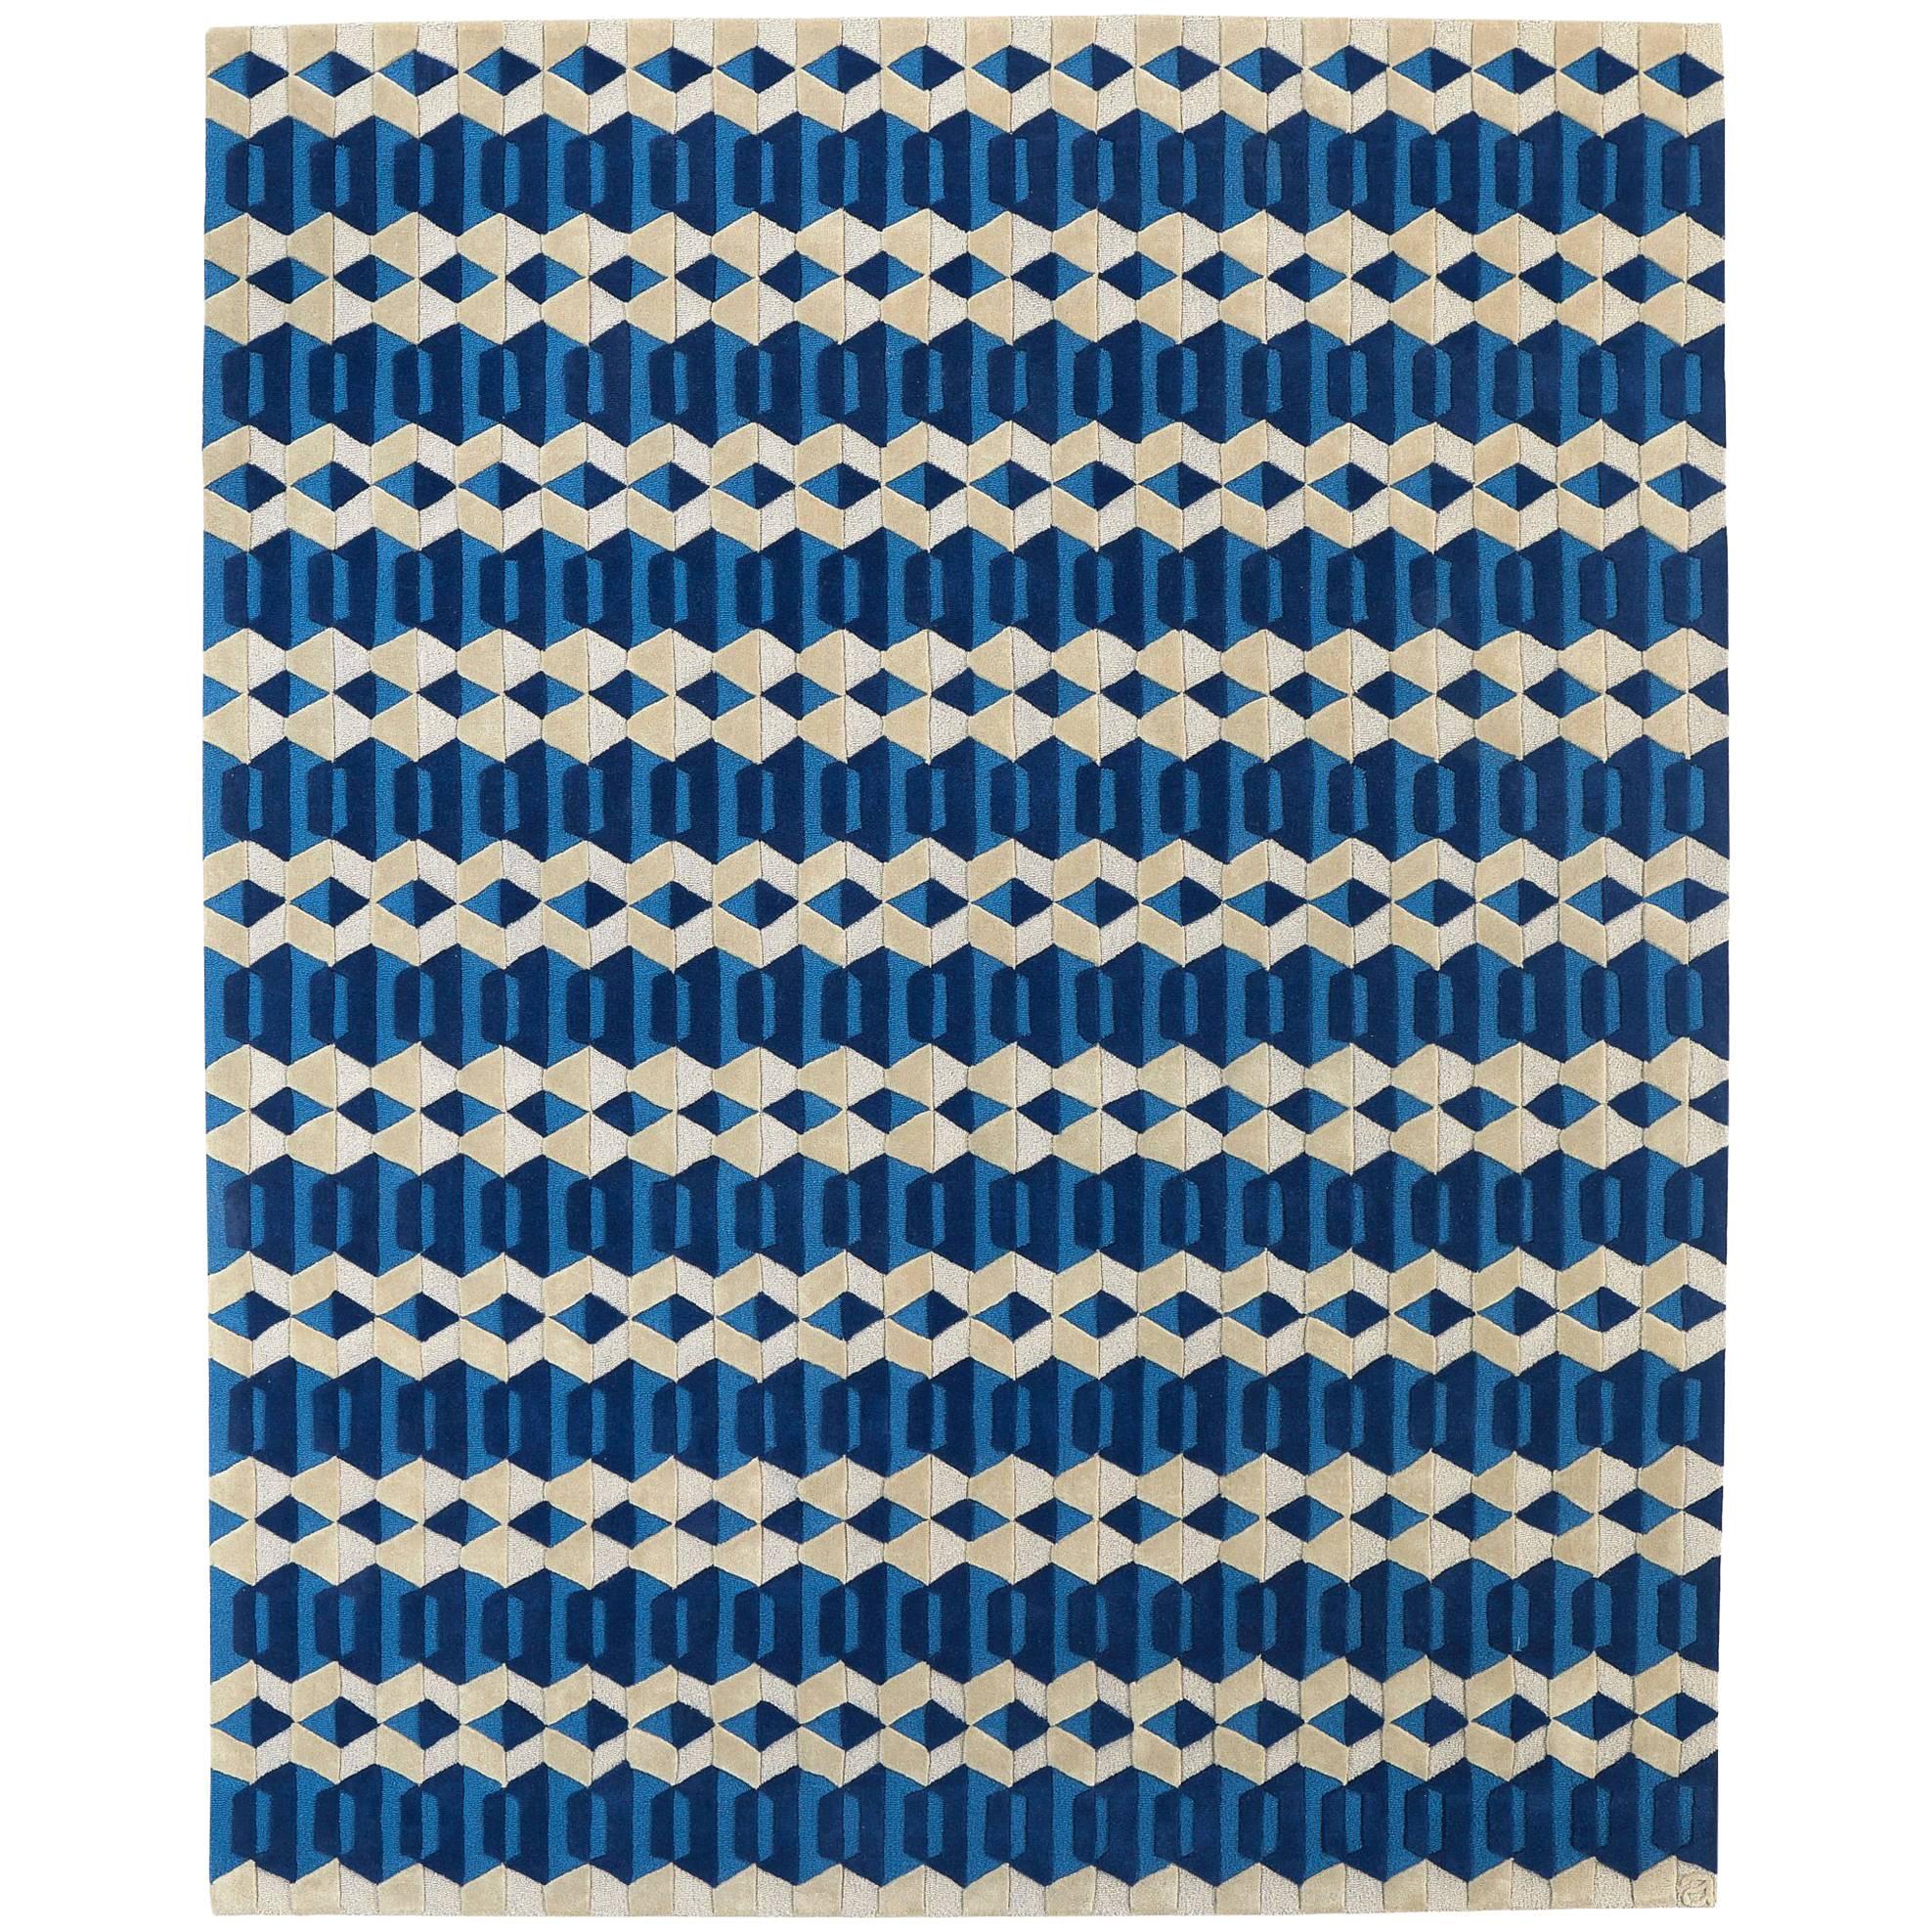 Angela Adams Garbo, Blue Area Rug, 100% New Zealand Wool, Handcrafted, Modern For Sale